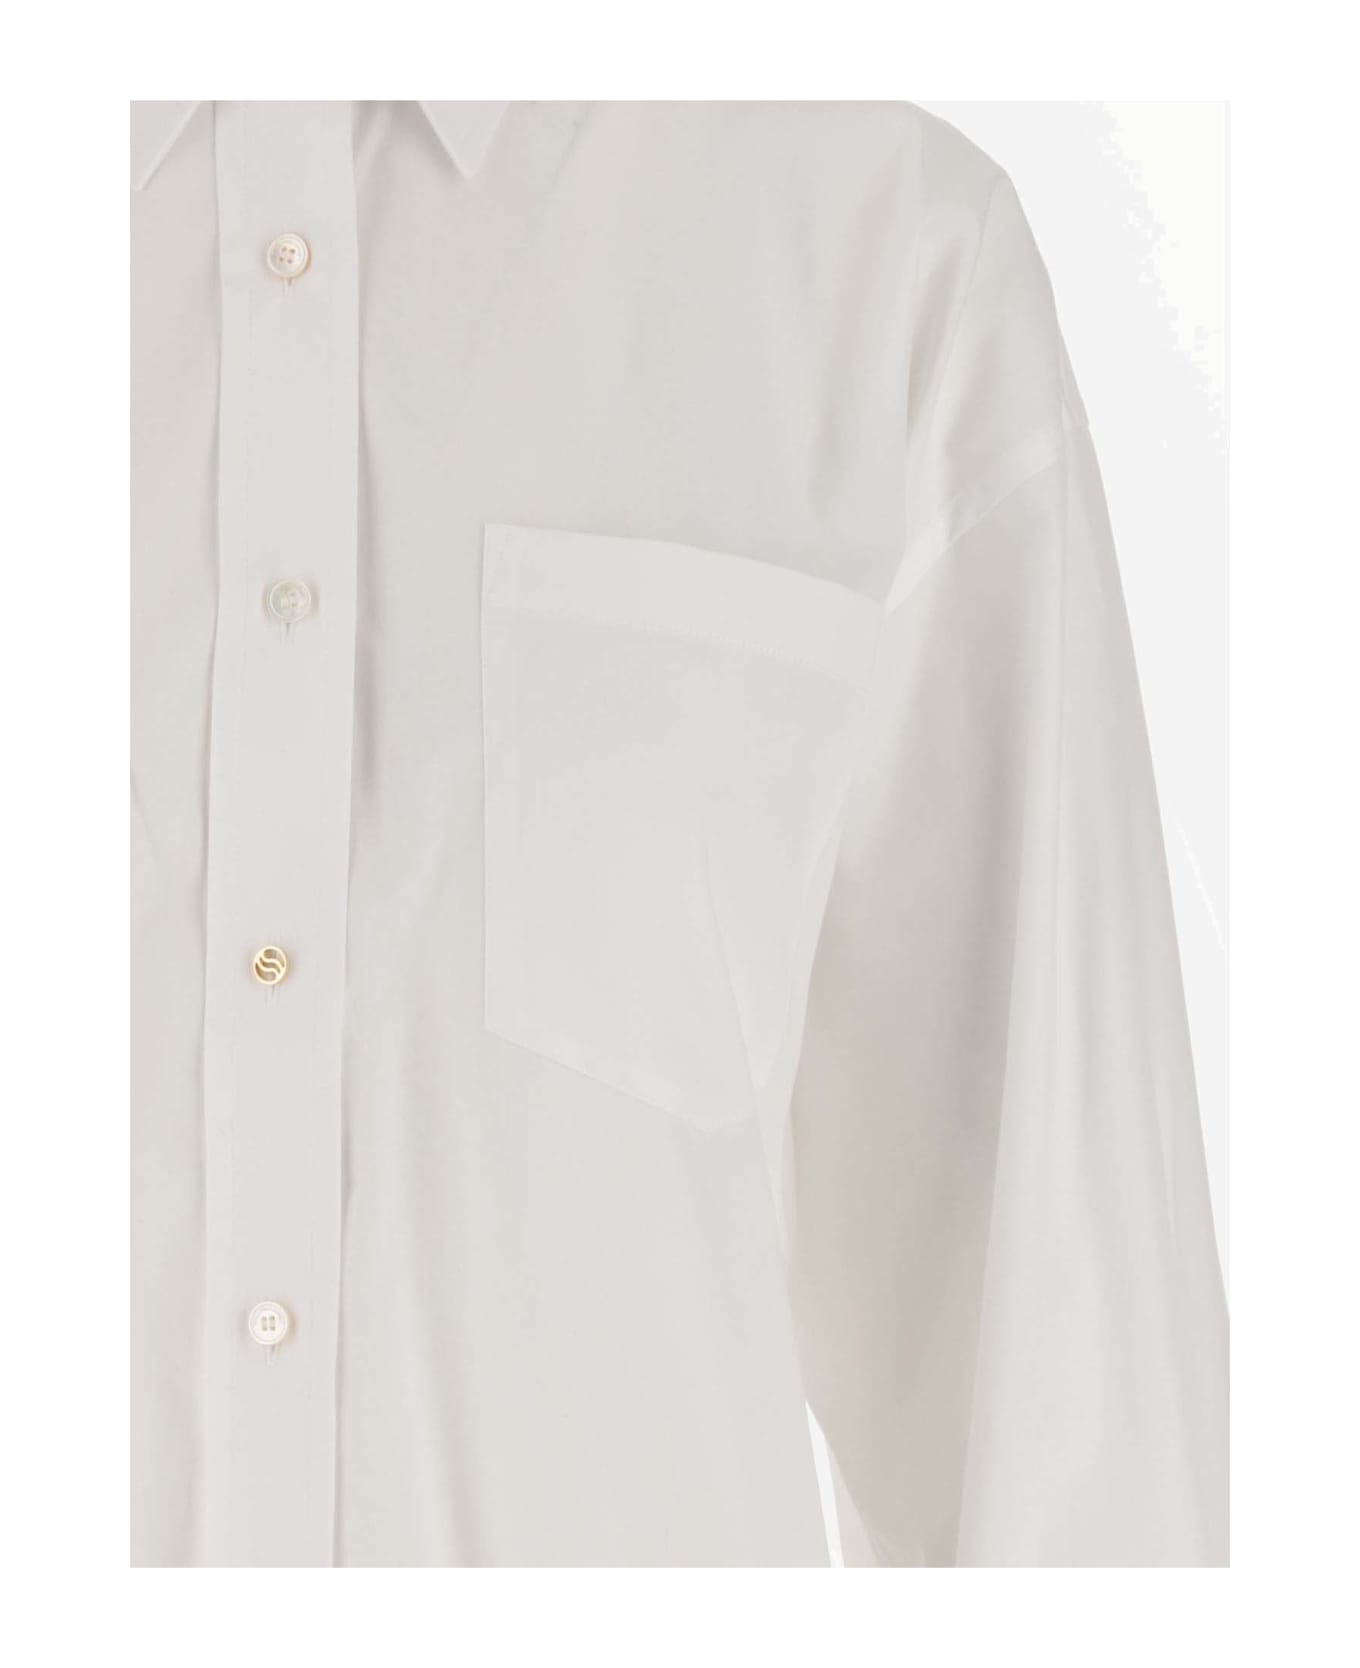 Stella McCartney Cotton Poplin Shirt - Pure White